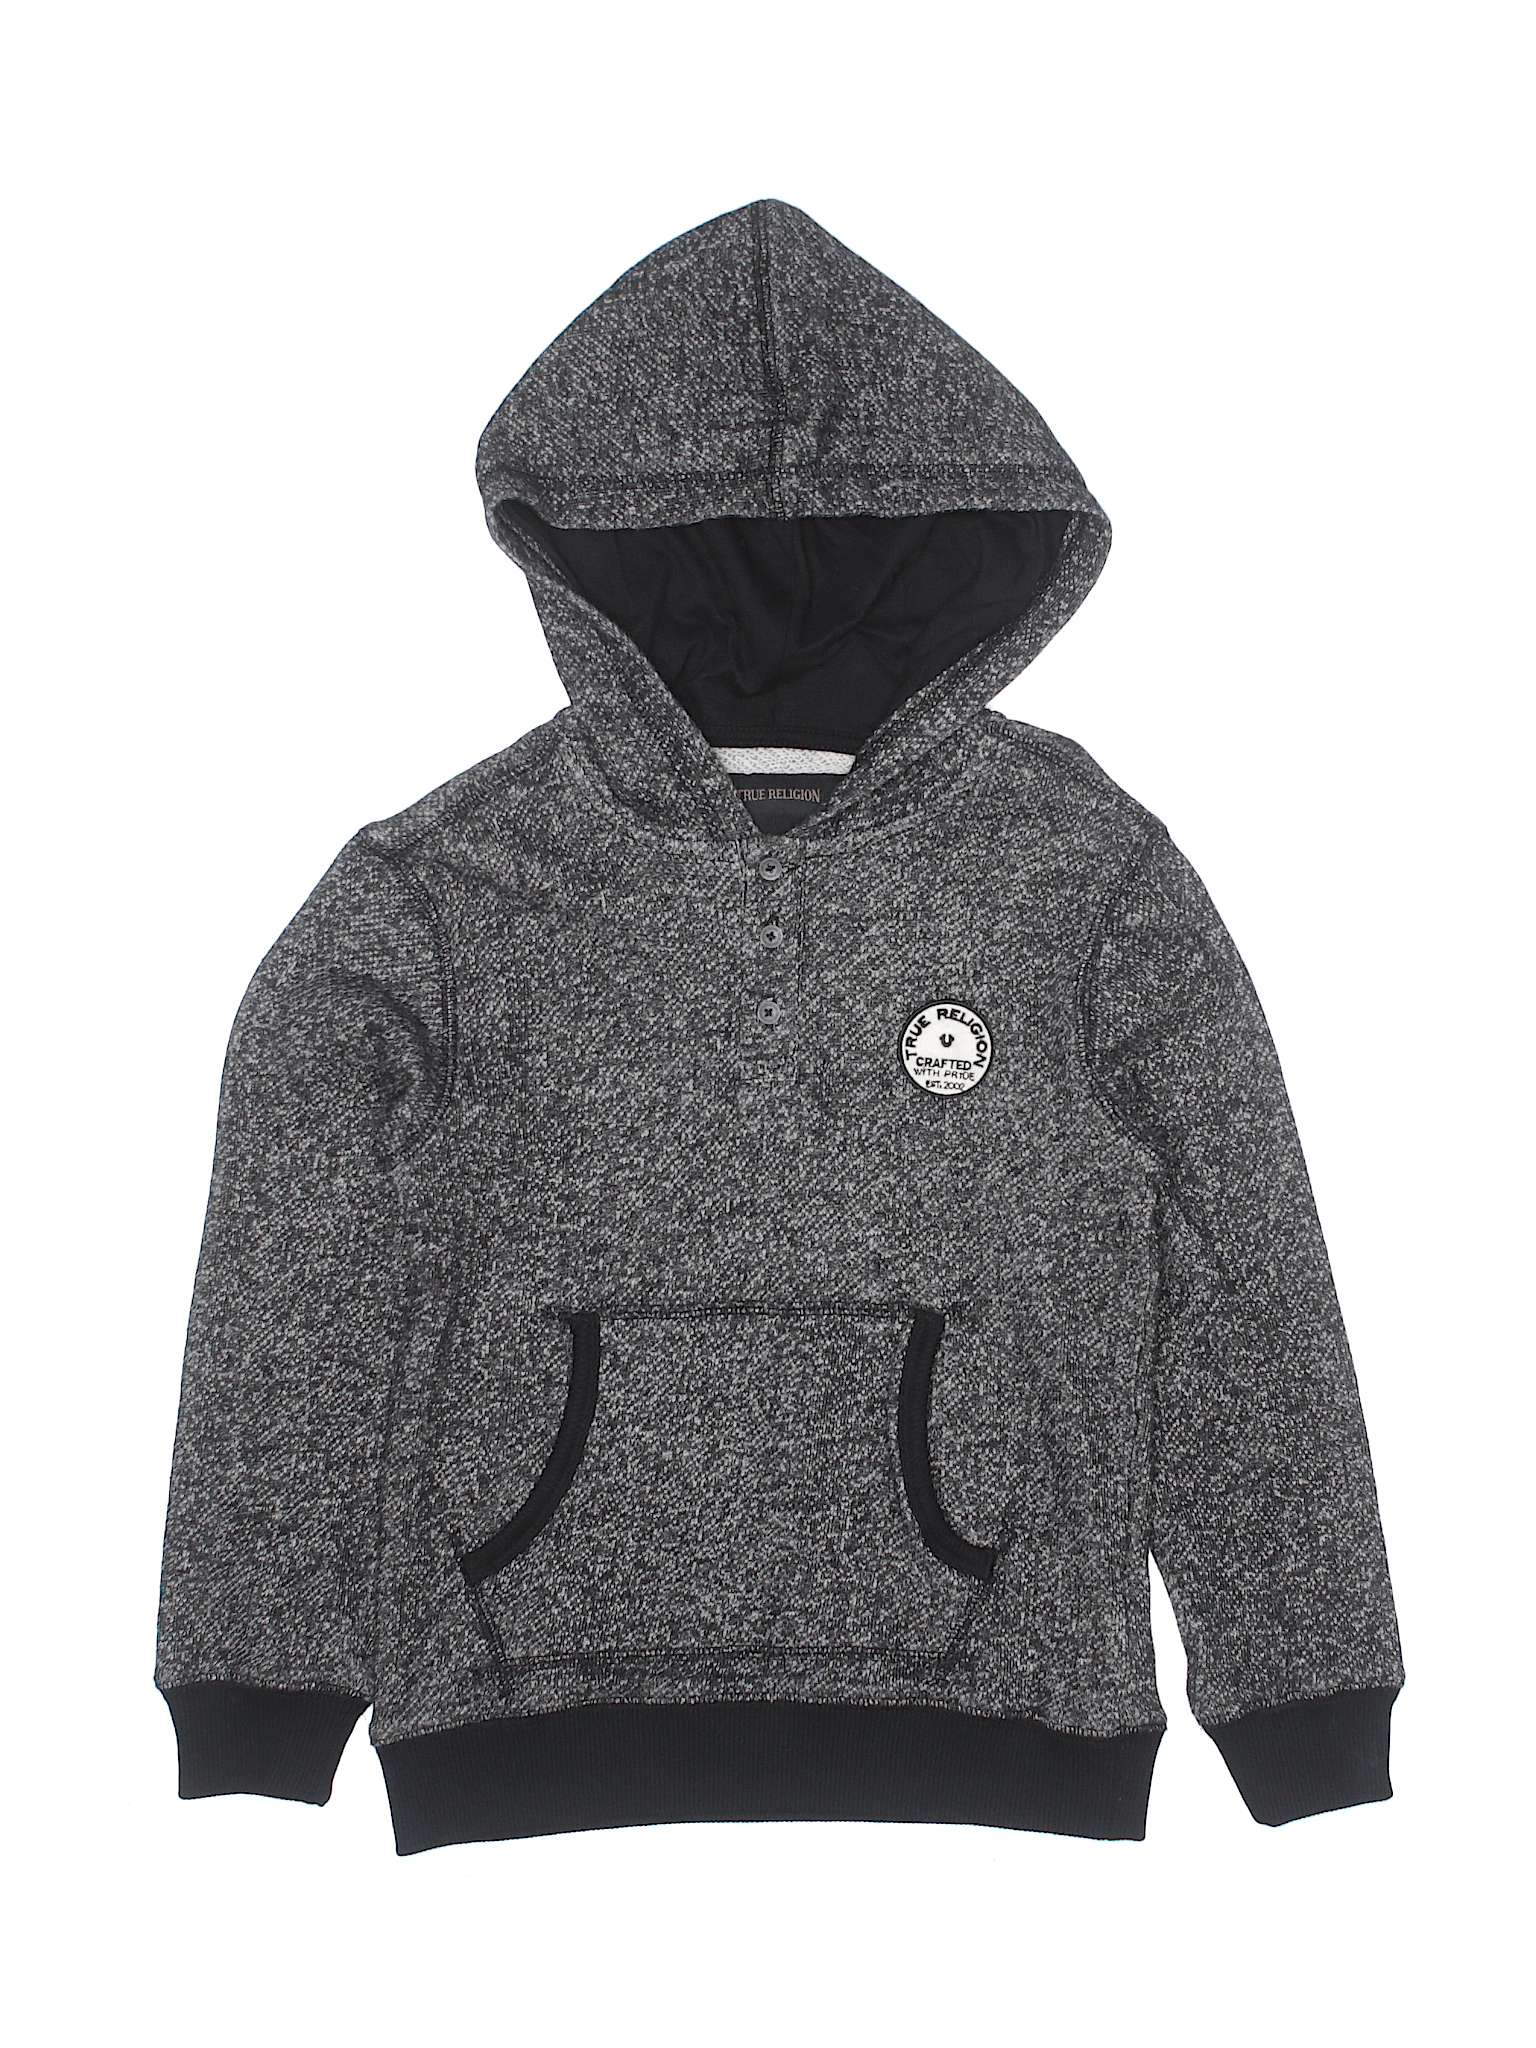 True Religion Solid Black Pullover Hoodie Size 5 - 82% off | thredUP